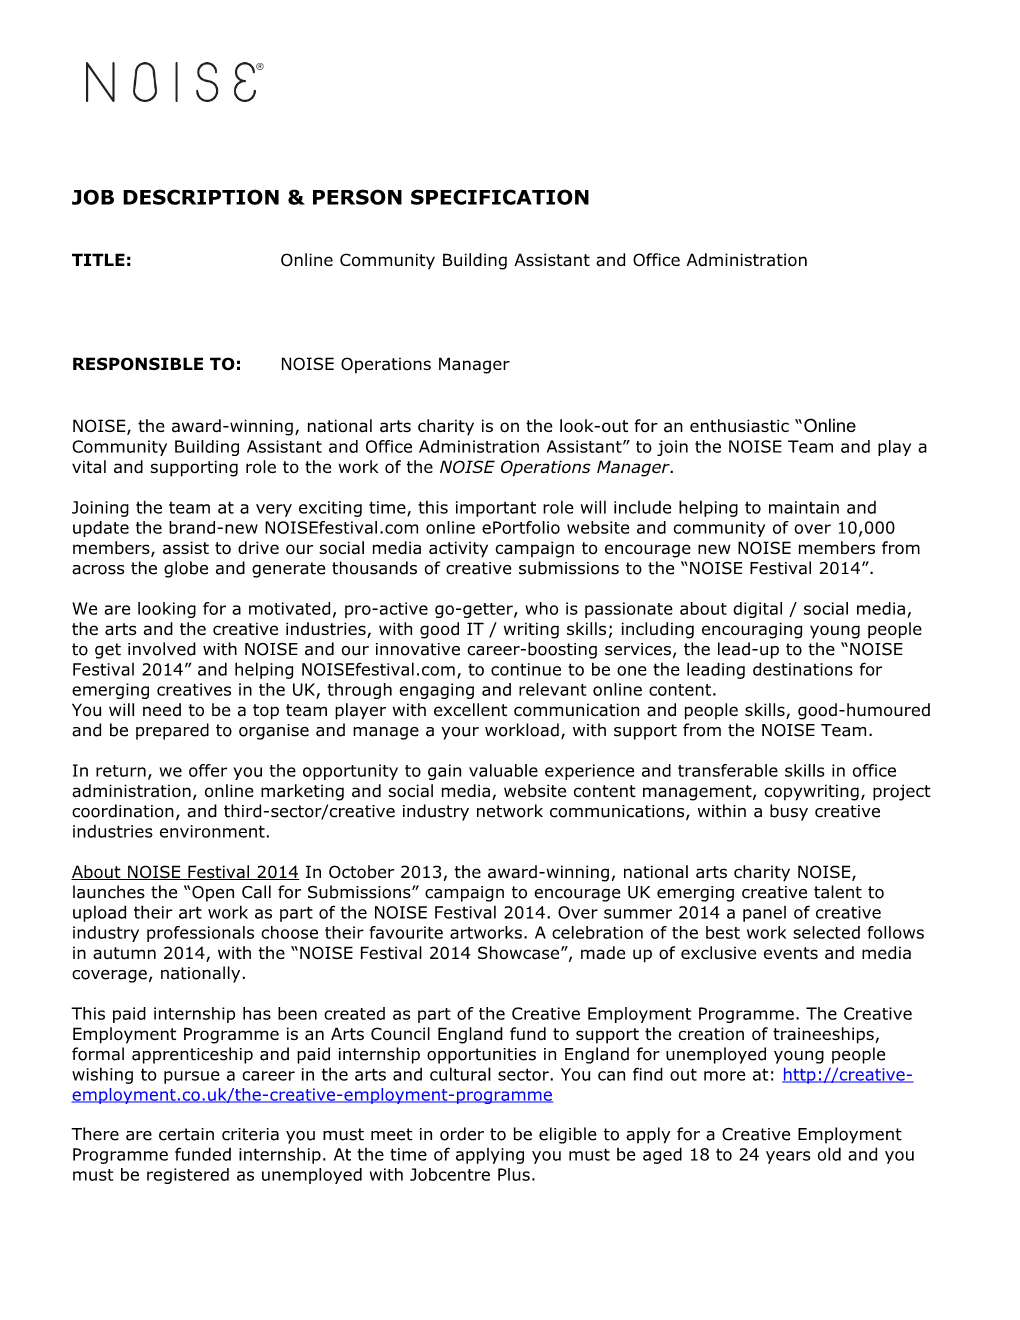 Job Description & Person Specification s8